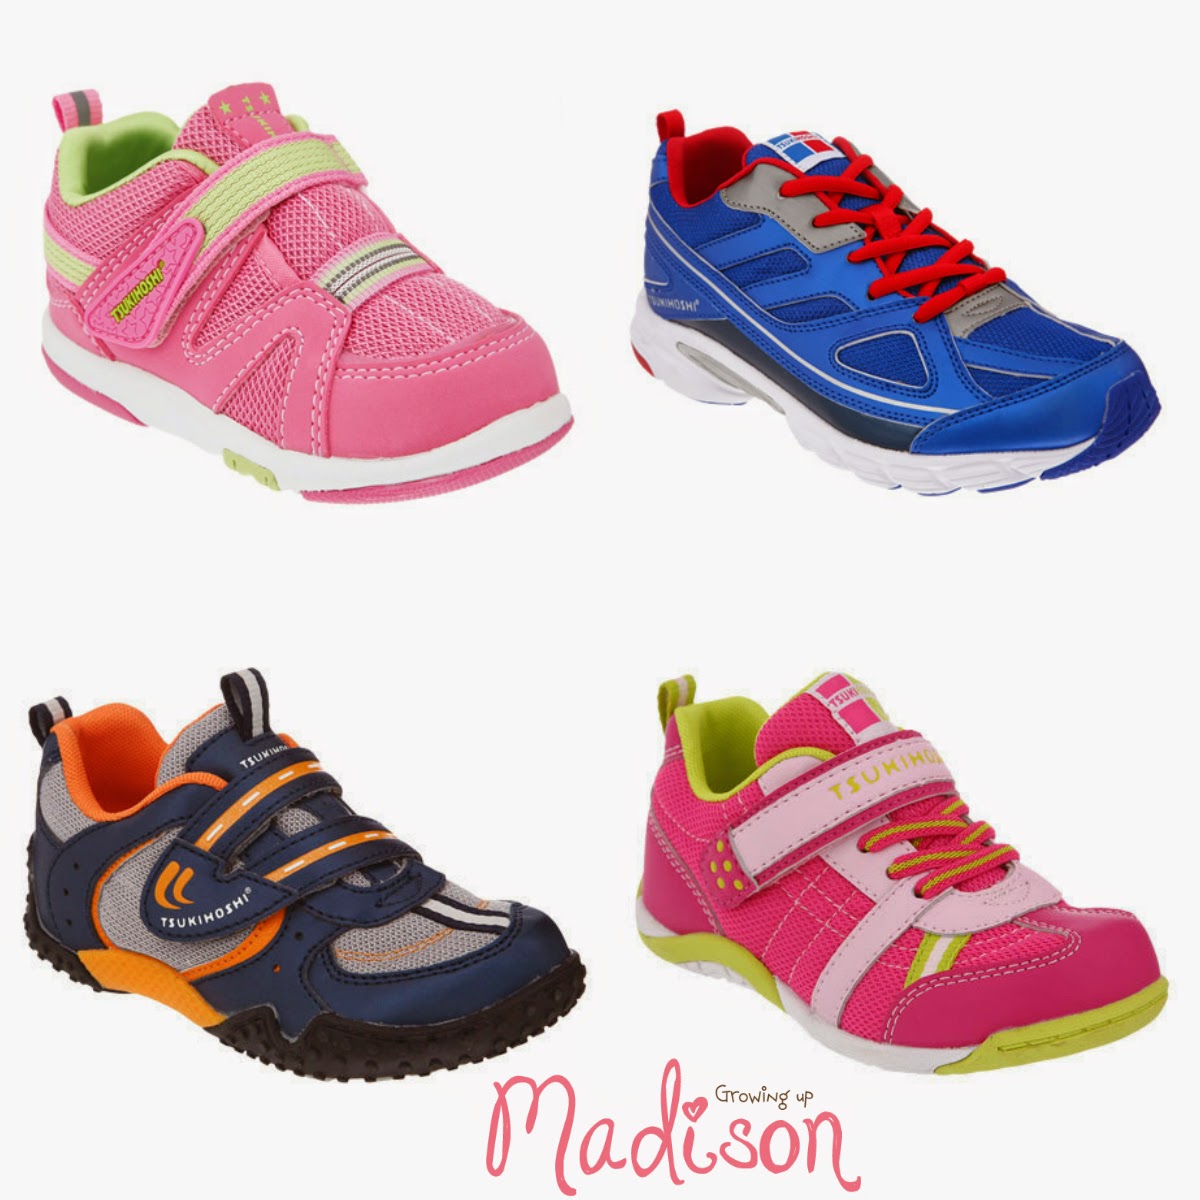 Tsukihoshi Shoes - Fashionable, Fun and Functional! | Growing up Madison